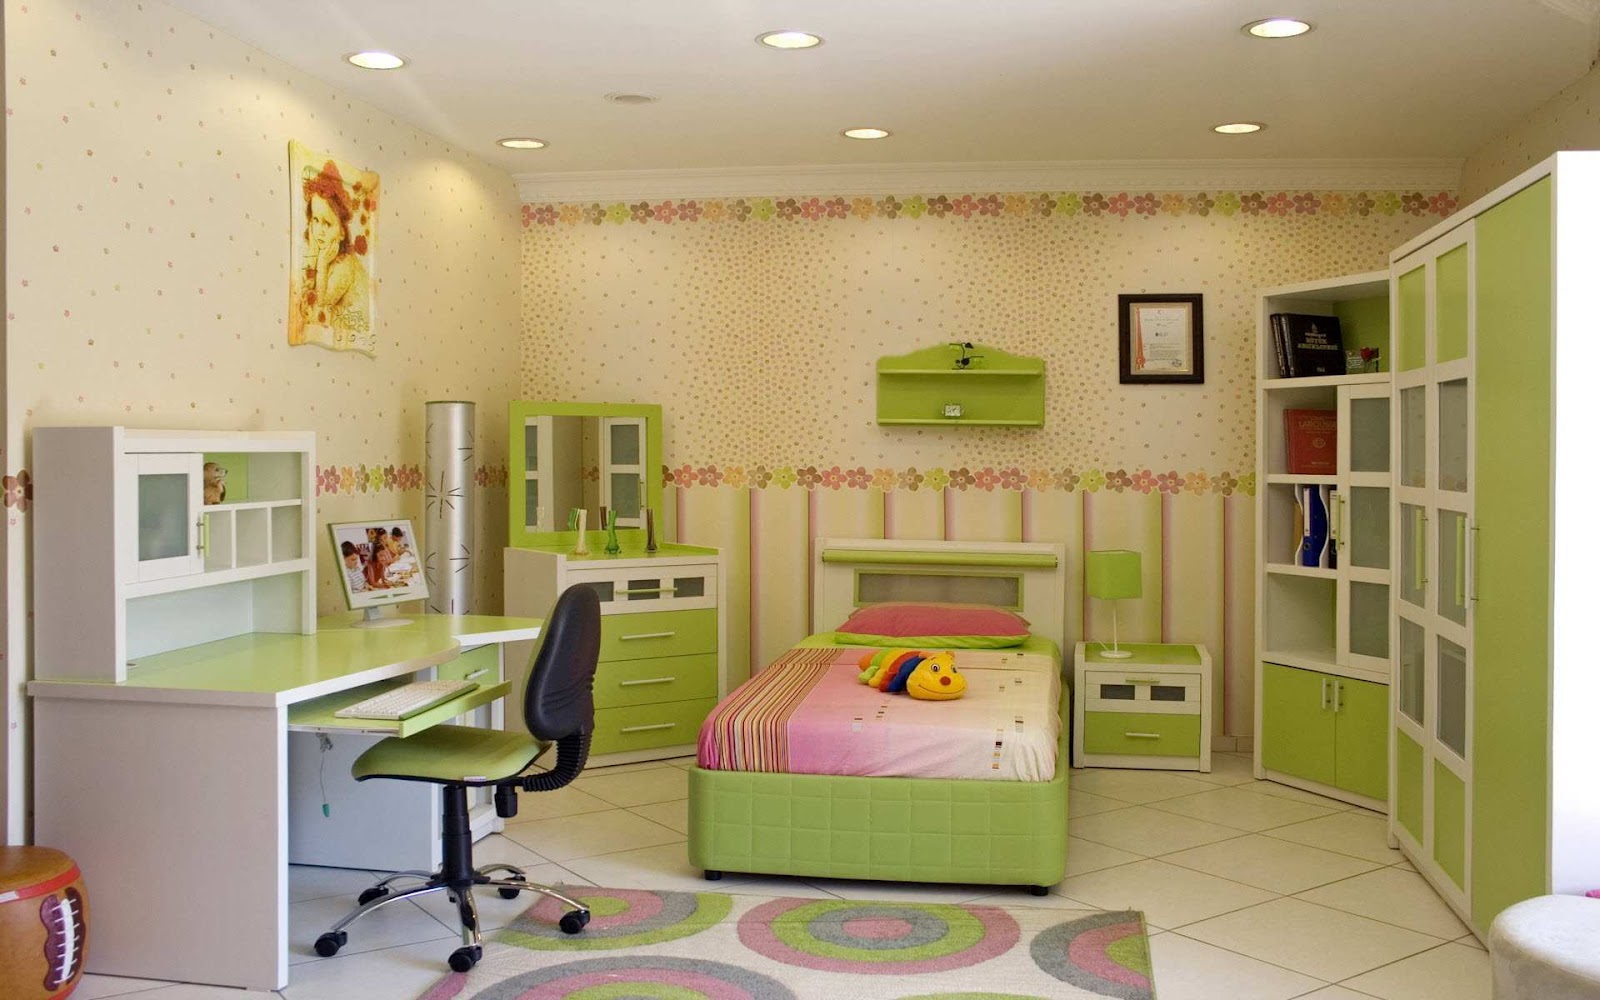 https://blogger.googleusercontent.com/img/b/R29vZ2xl/AVvXsEhUFABzfcKq7qqSsnb7JEsE78urhgtUTouYcjq0bED8lfjbQ5pErIZOnNMXt67jvadOqbhNQuGtgXCfMWJWj5sXuHuY0Dak8WsCj33idaNtQ5pZhQxifUHqyquAkMtWhd-j-ESQ4Wpvgkg/s1600/Best-Kids-Room-home-Interior-Designs8.jpg